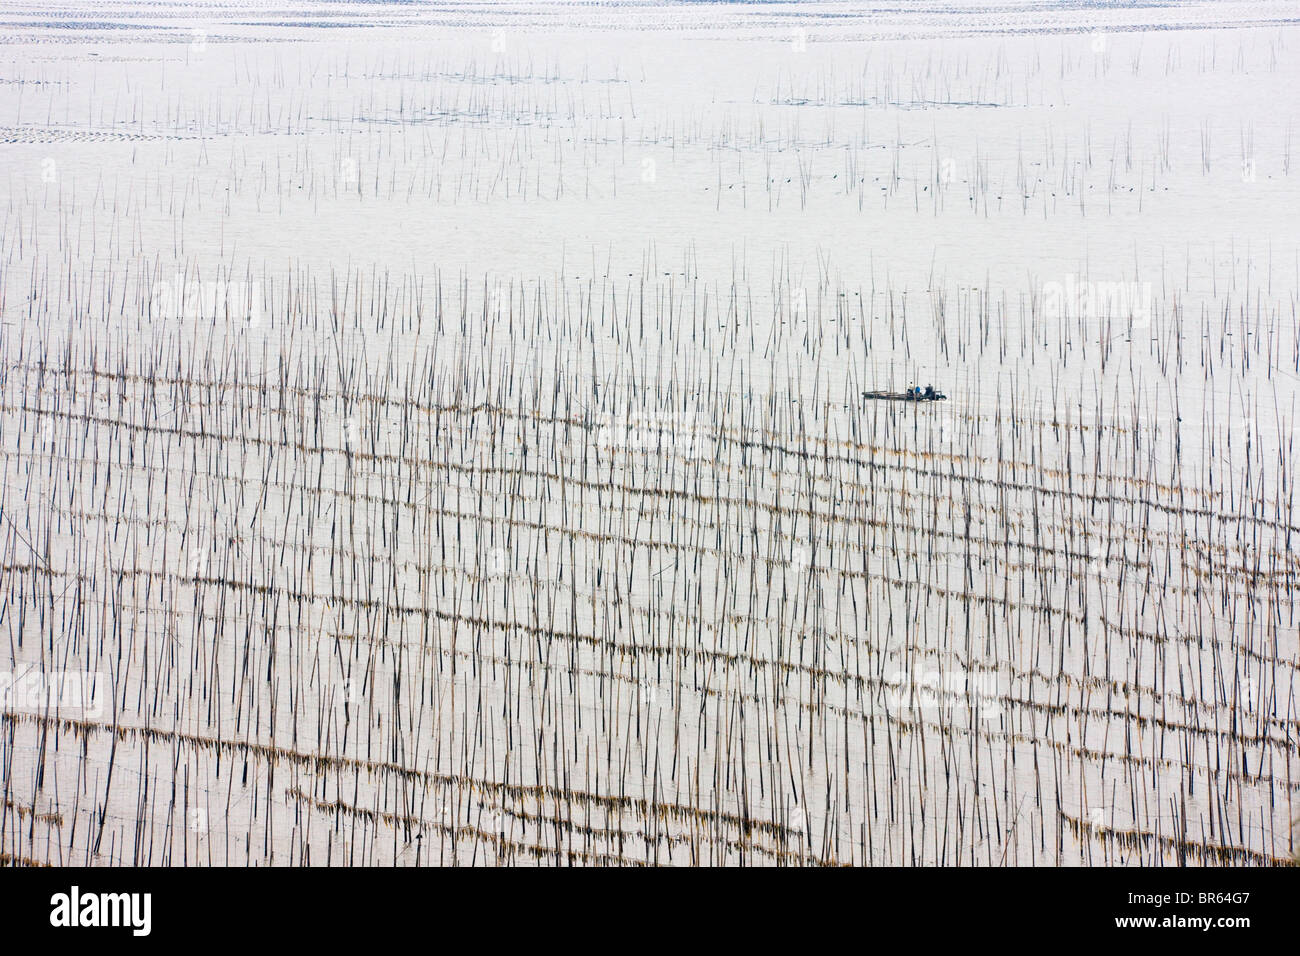 Angelboot/Fischerboot Segeln durch Bambus Stöcke für trocknende Algen, East China Sea, Xiapu, Fujian, China Stockfoto